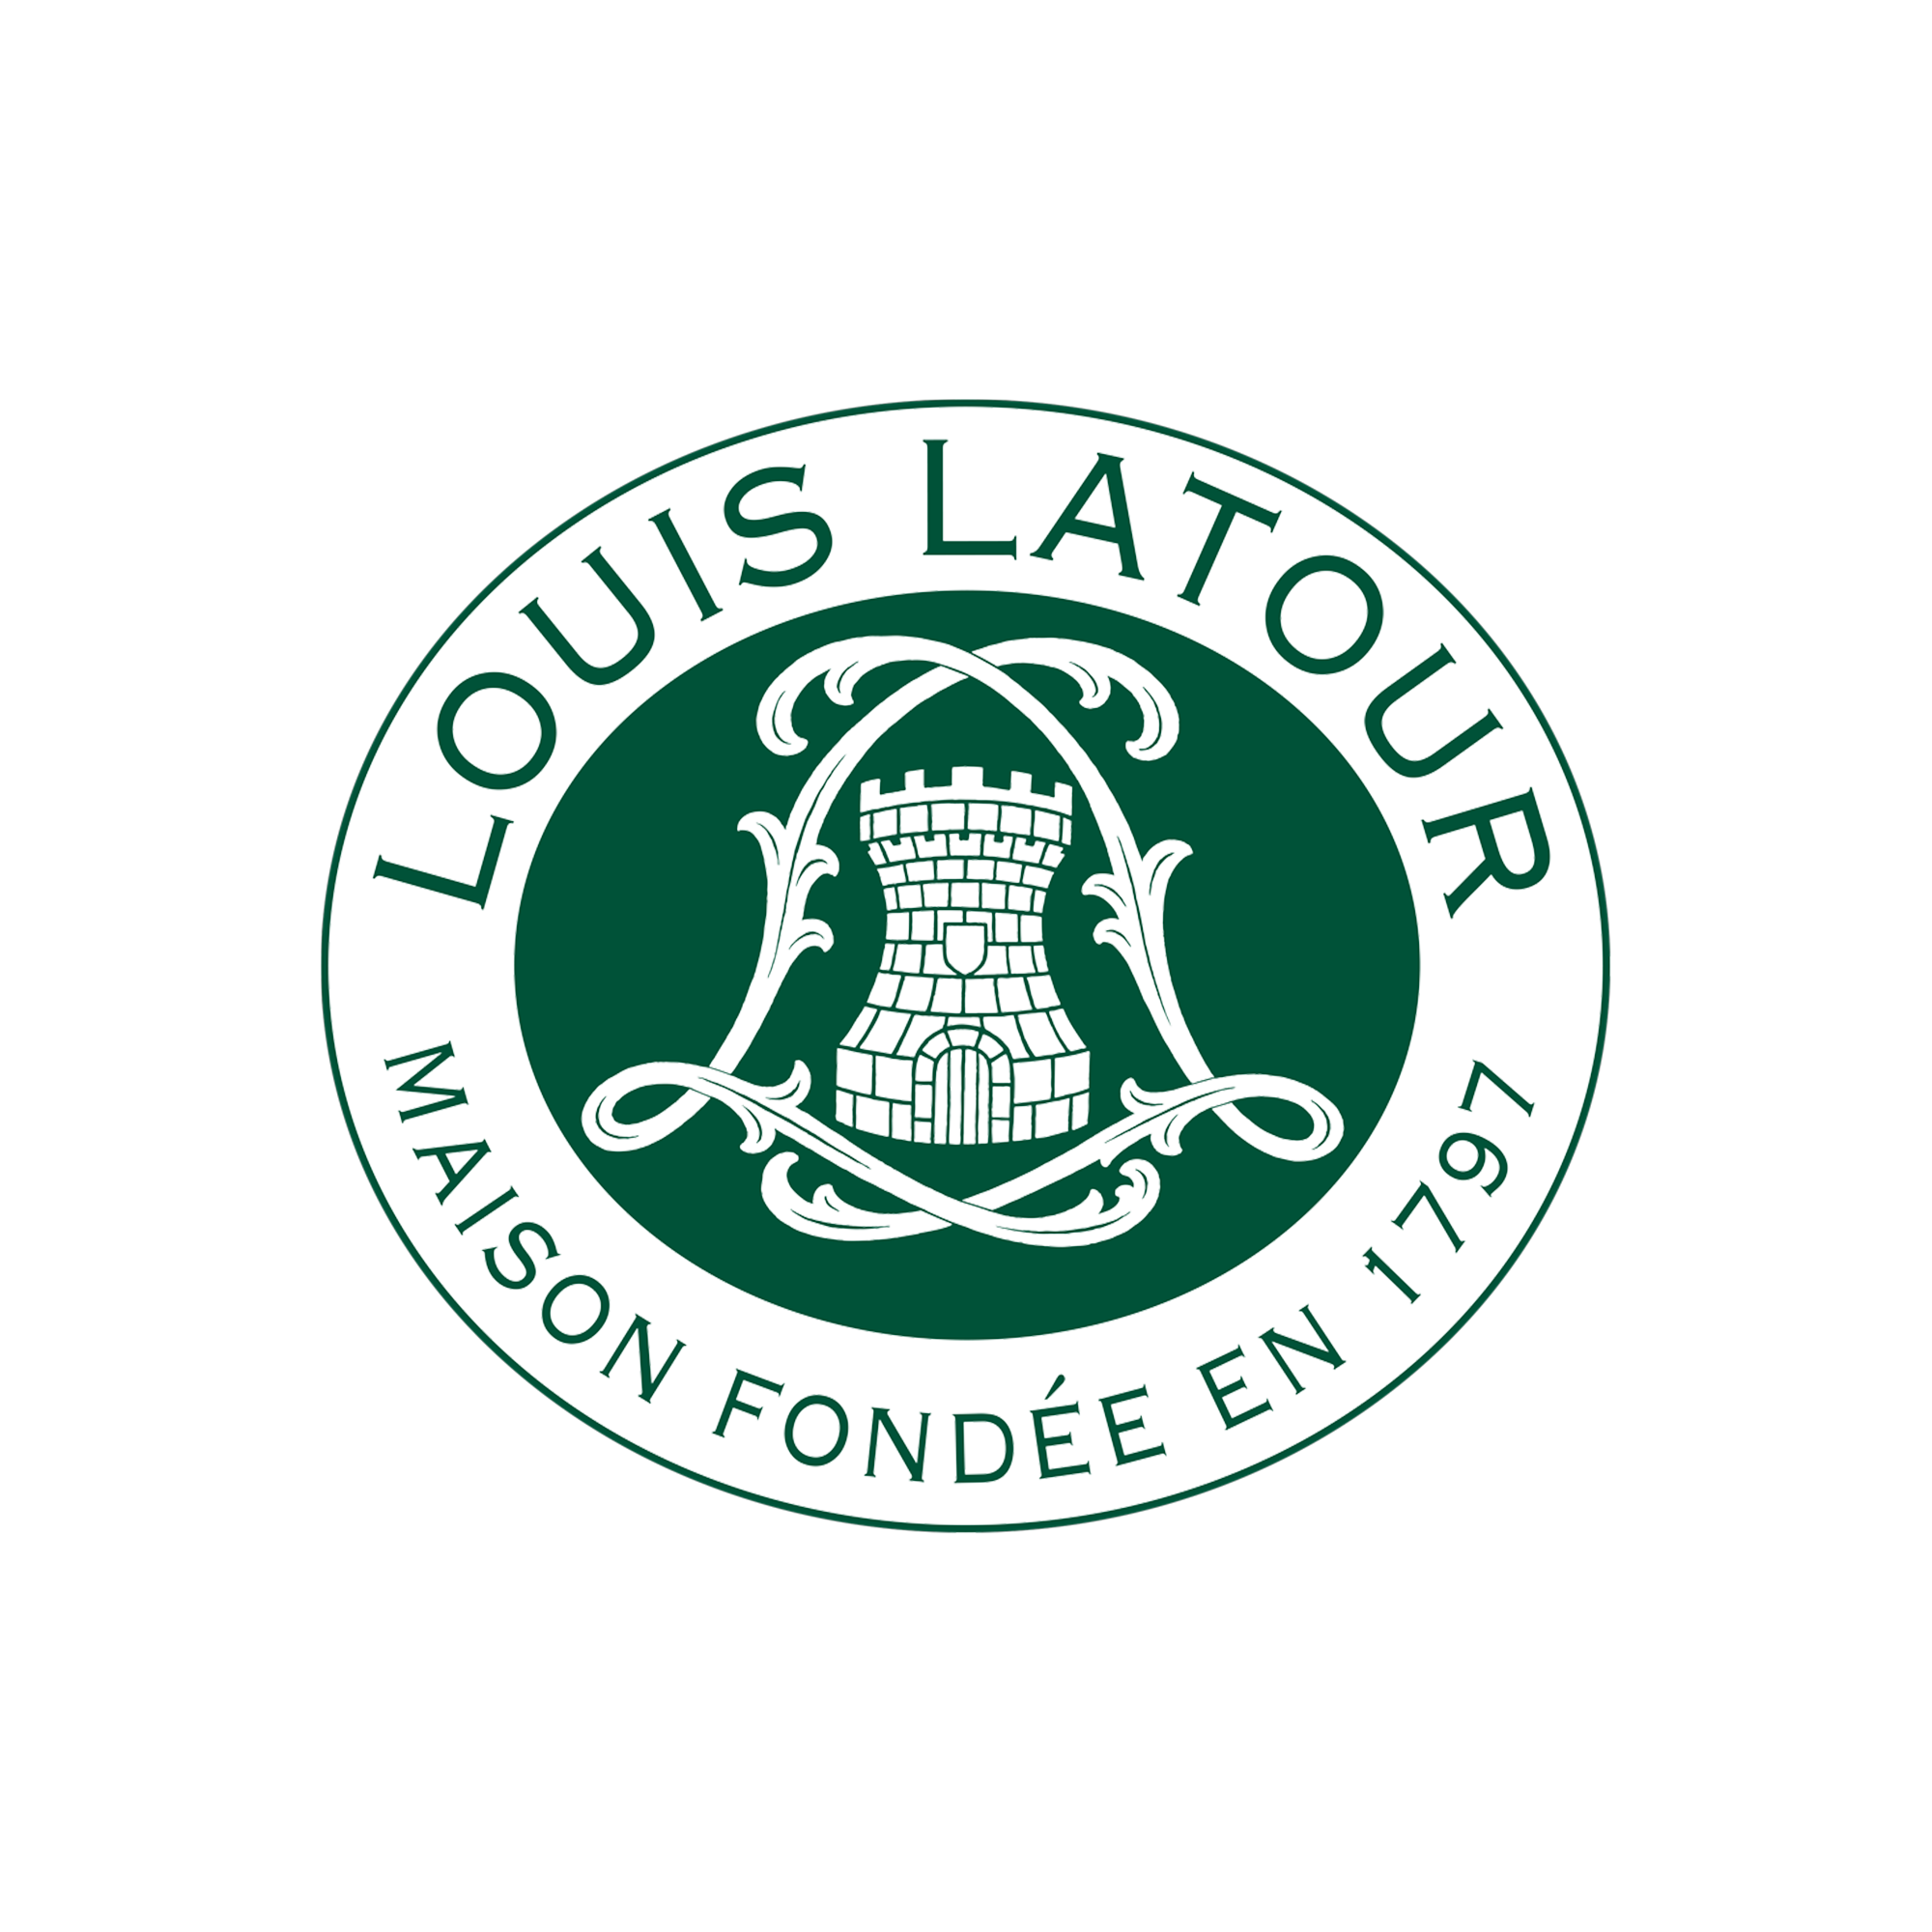 Louis La Tour